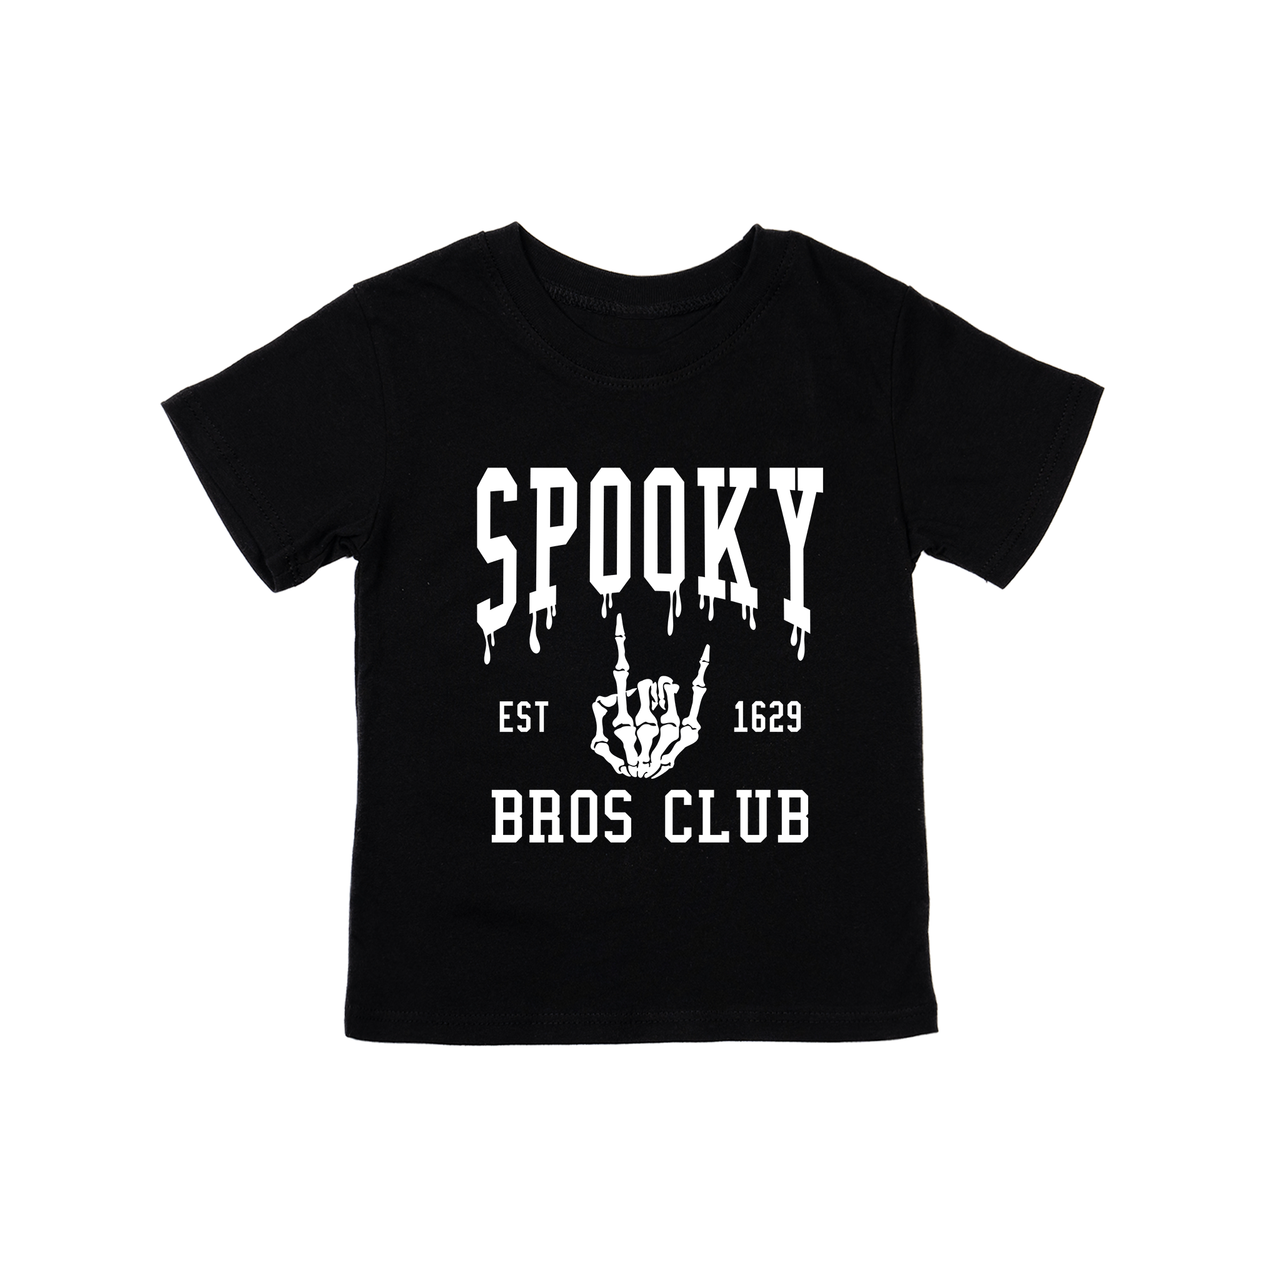 Spooky Bros Club (White) - Kids Tee (Black)